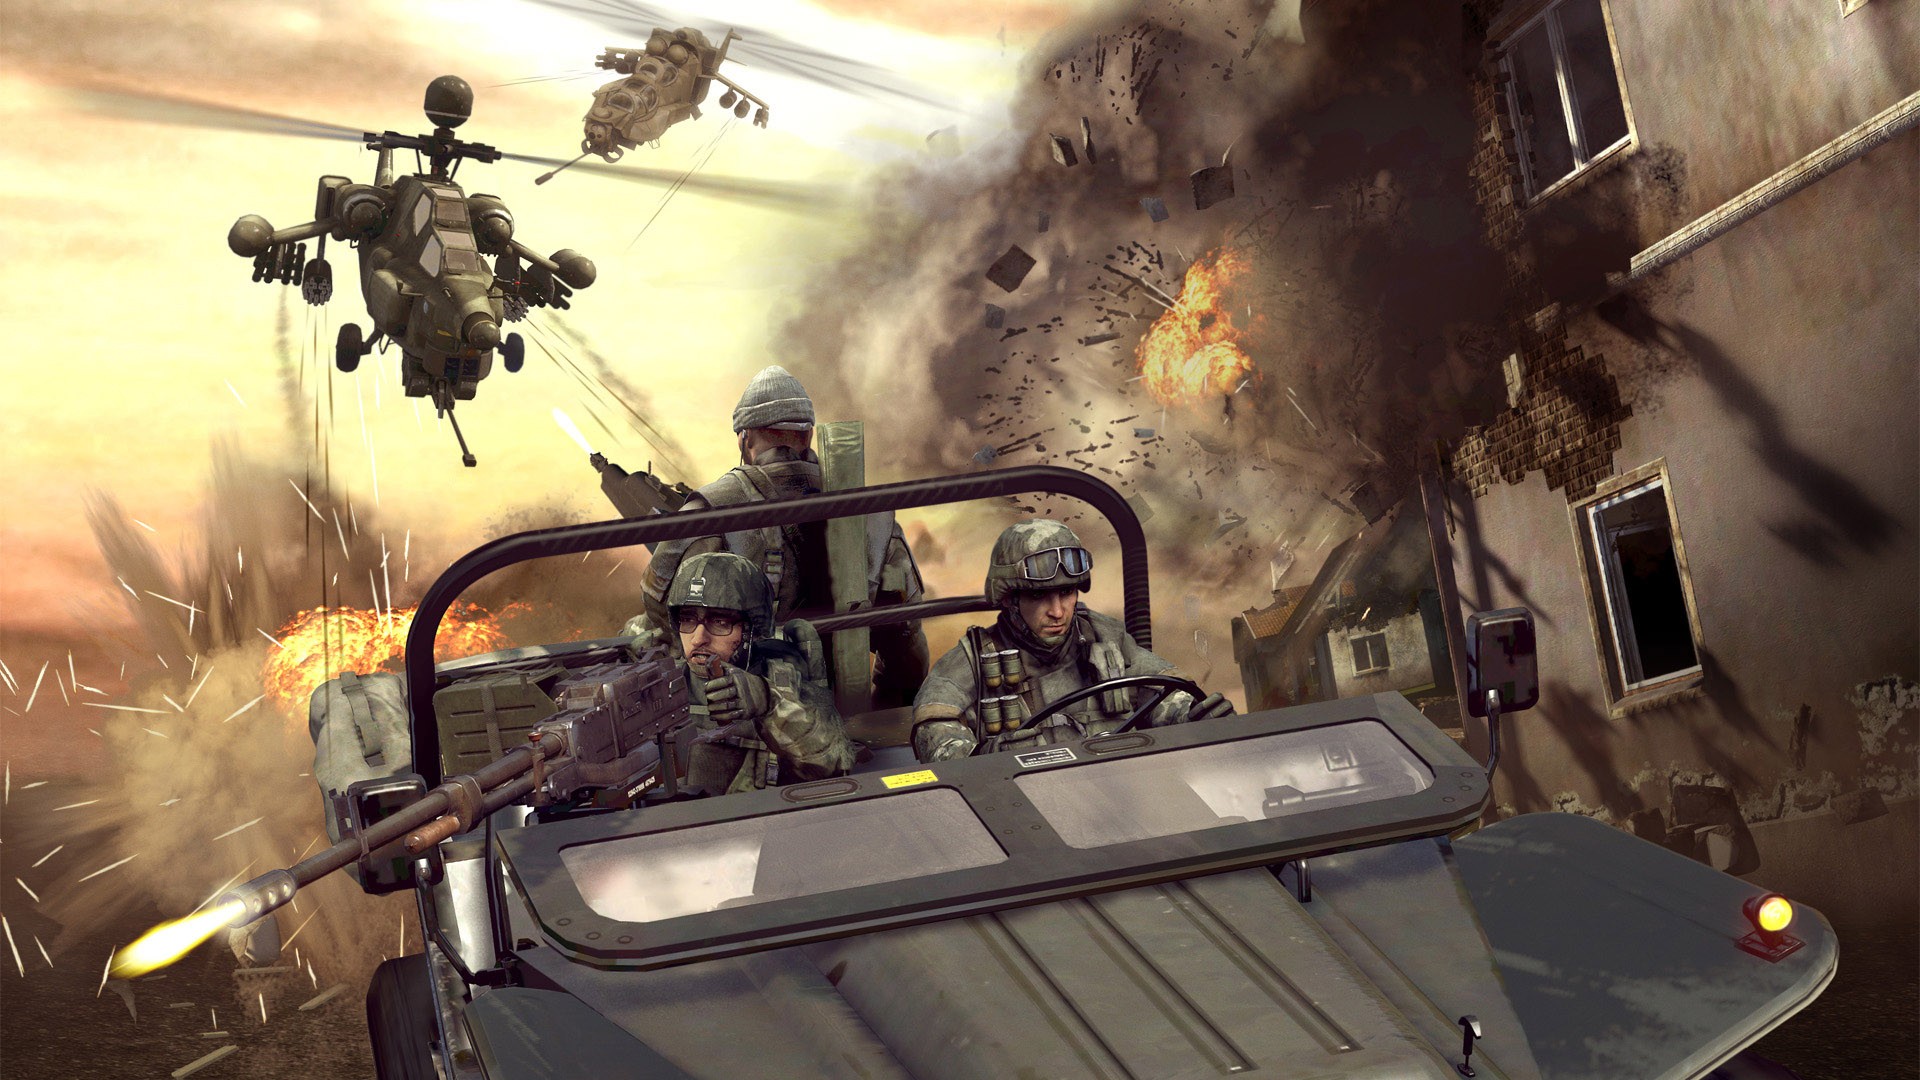 поле боя, Battlefield Bad Company 2 - обои на рабочий стол